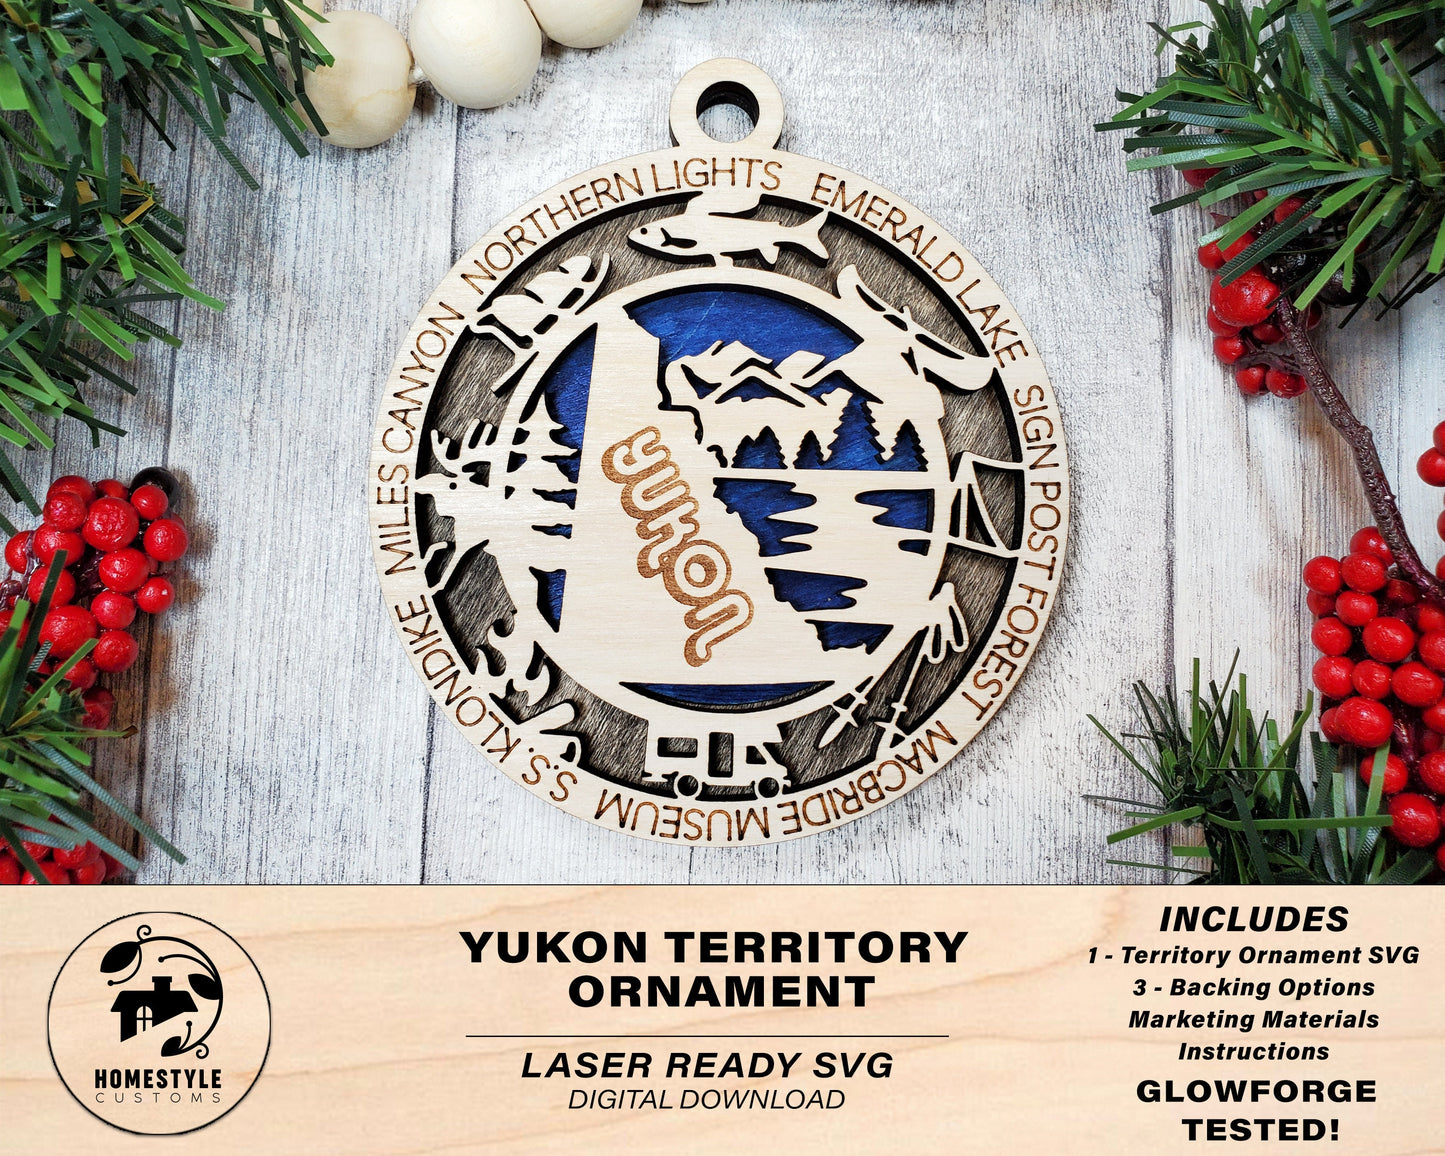 Yukon Ornament - Canada - SVG File Download - Sized for Glowforge - Laser Ready Digital Files